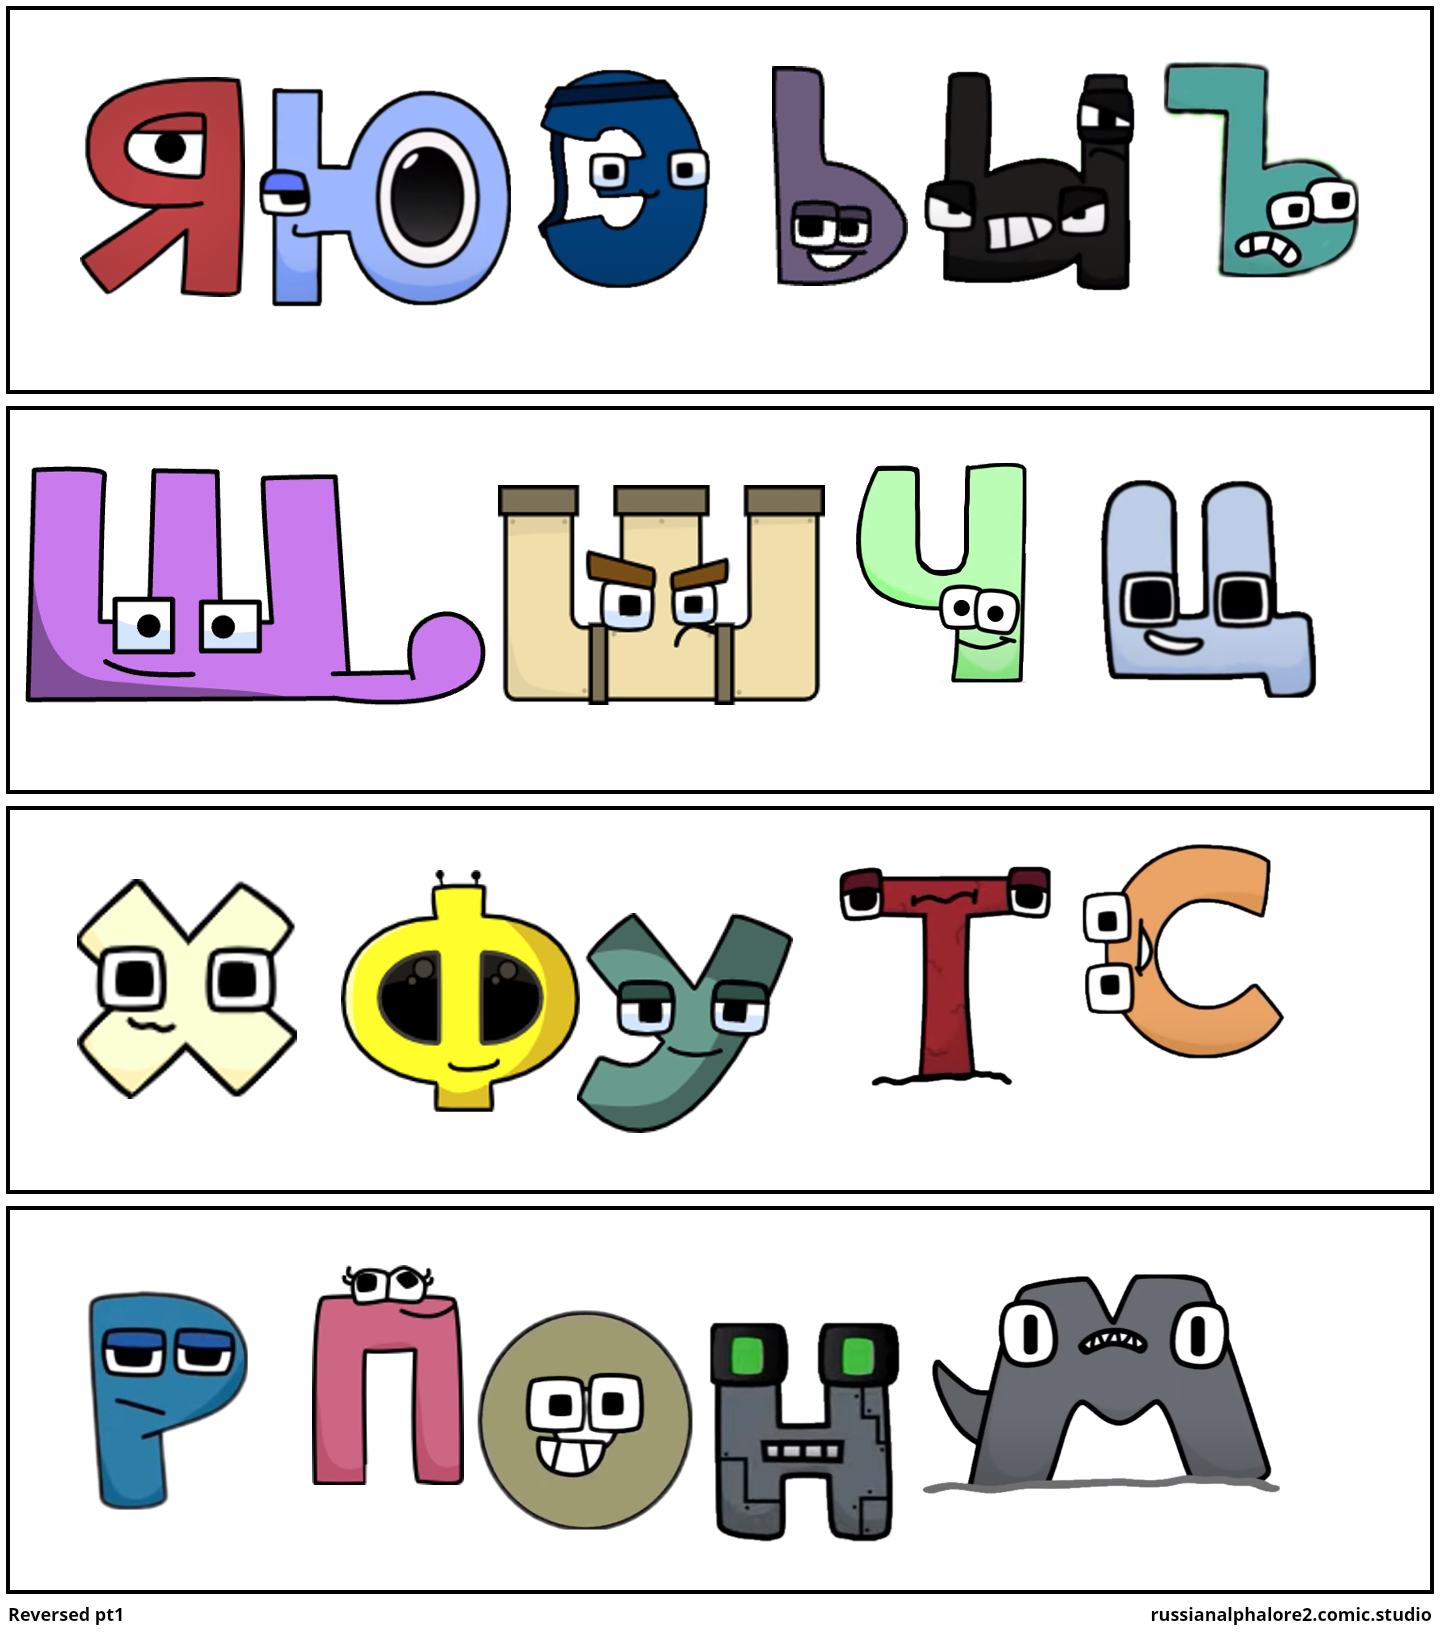 Reverse alphabet lore Z-O - Comic Studio